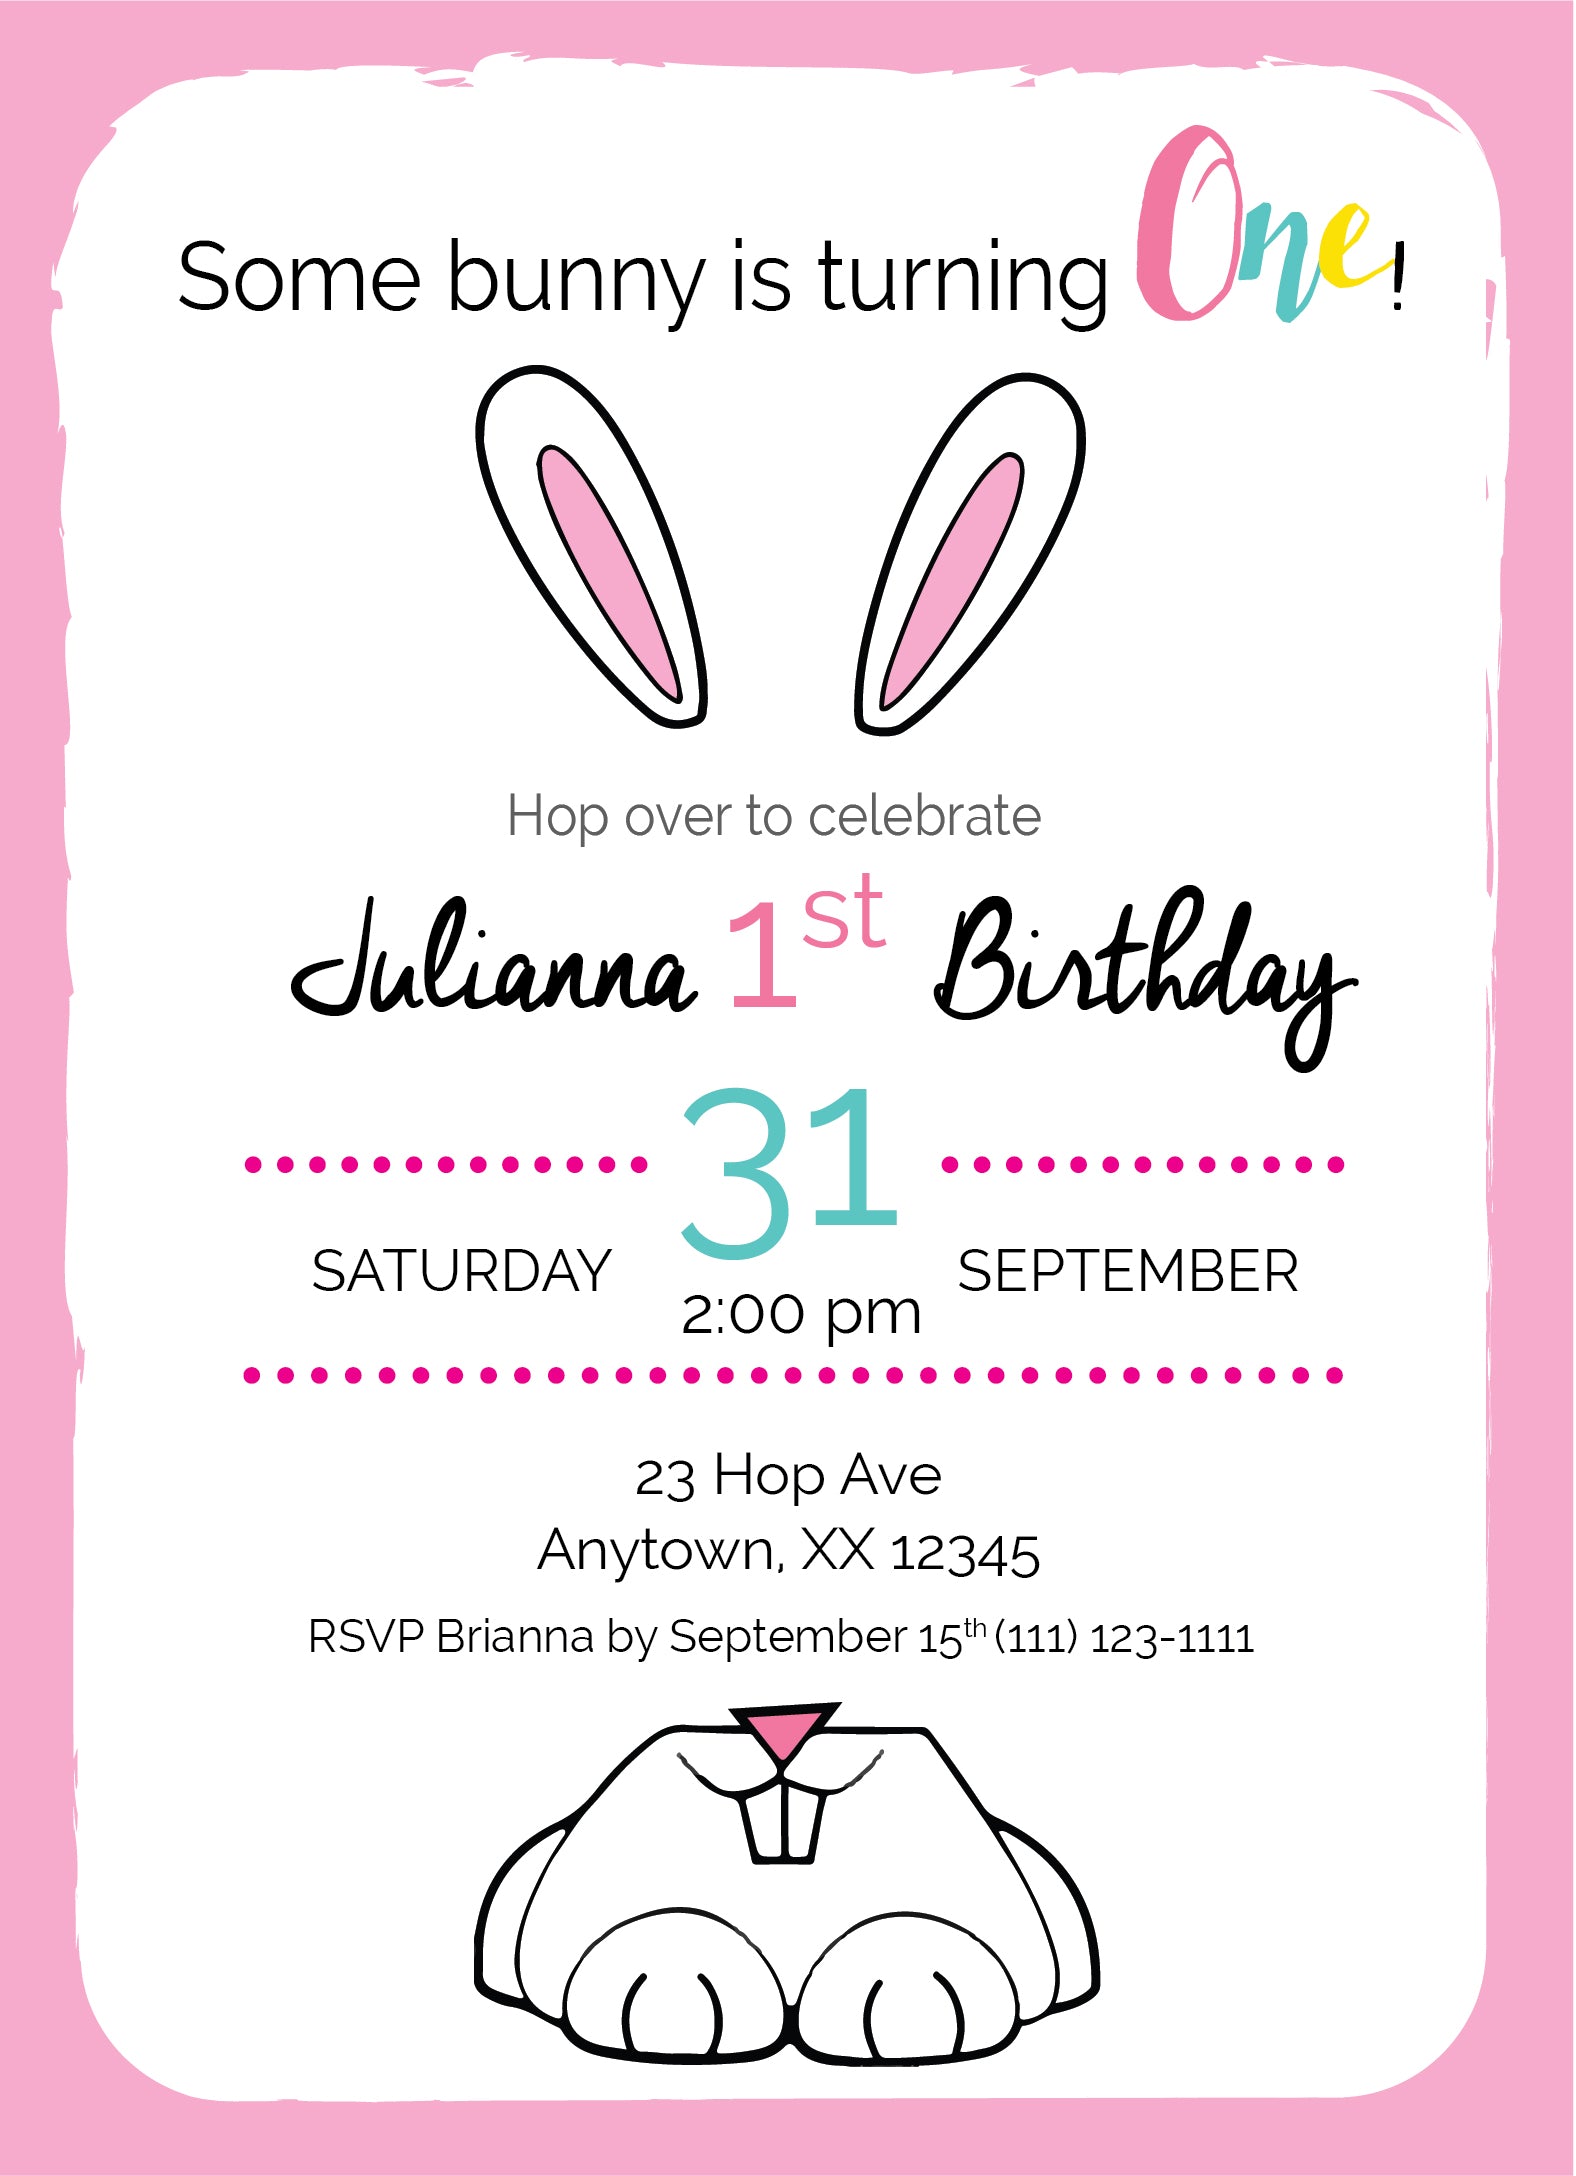 Some Bunny Birthday Invitation - Invitetique